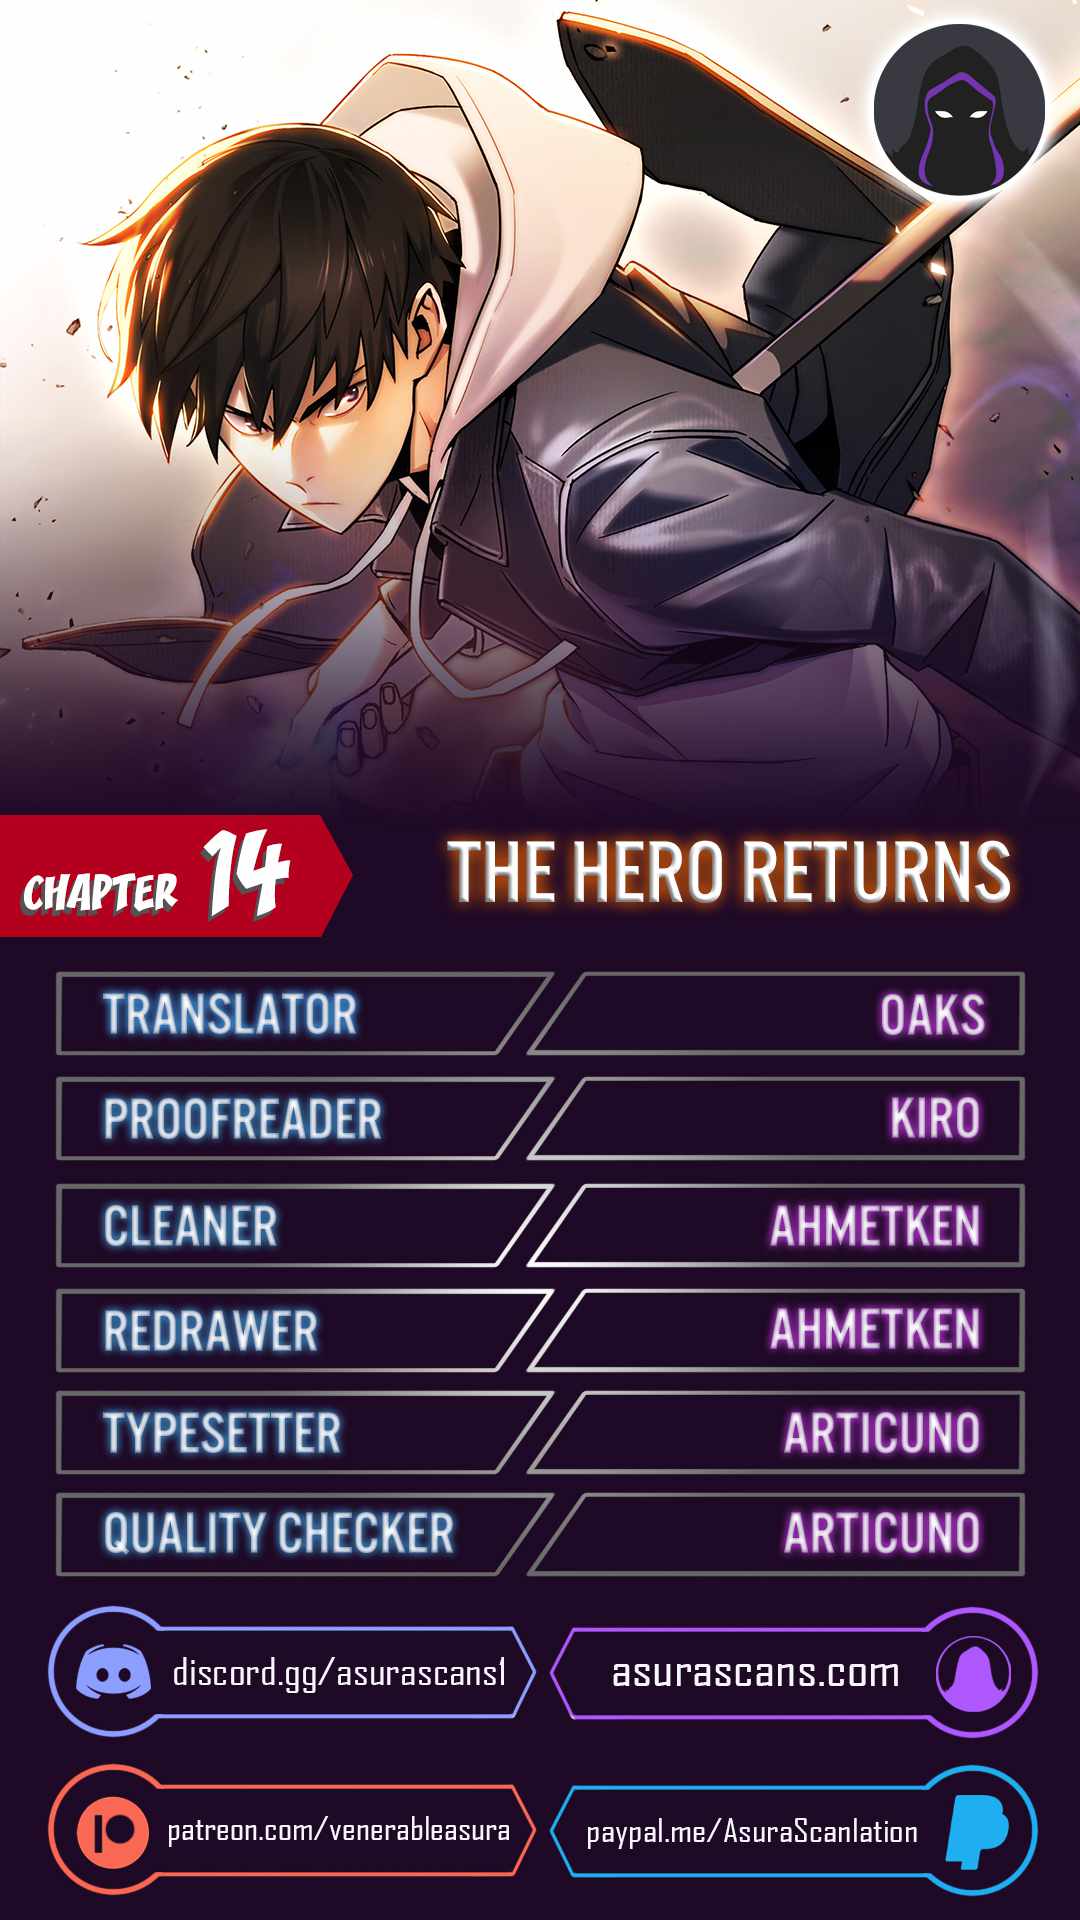 The Hero Returns chapter 14